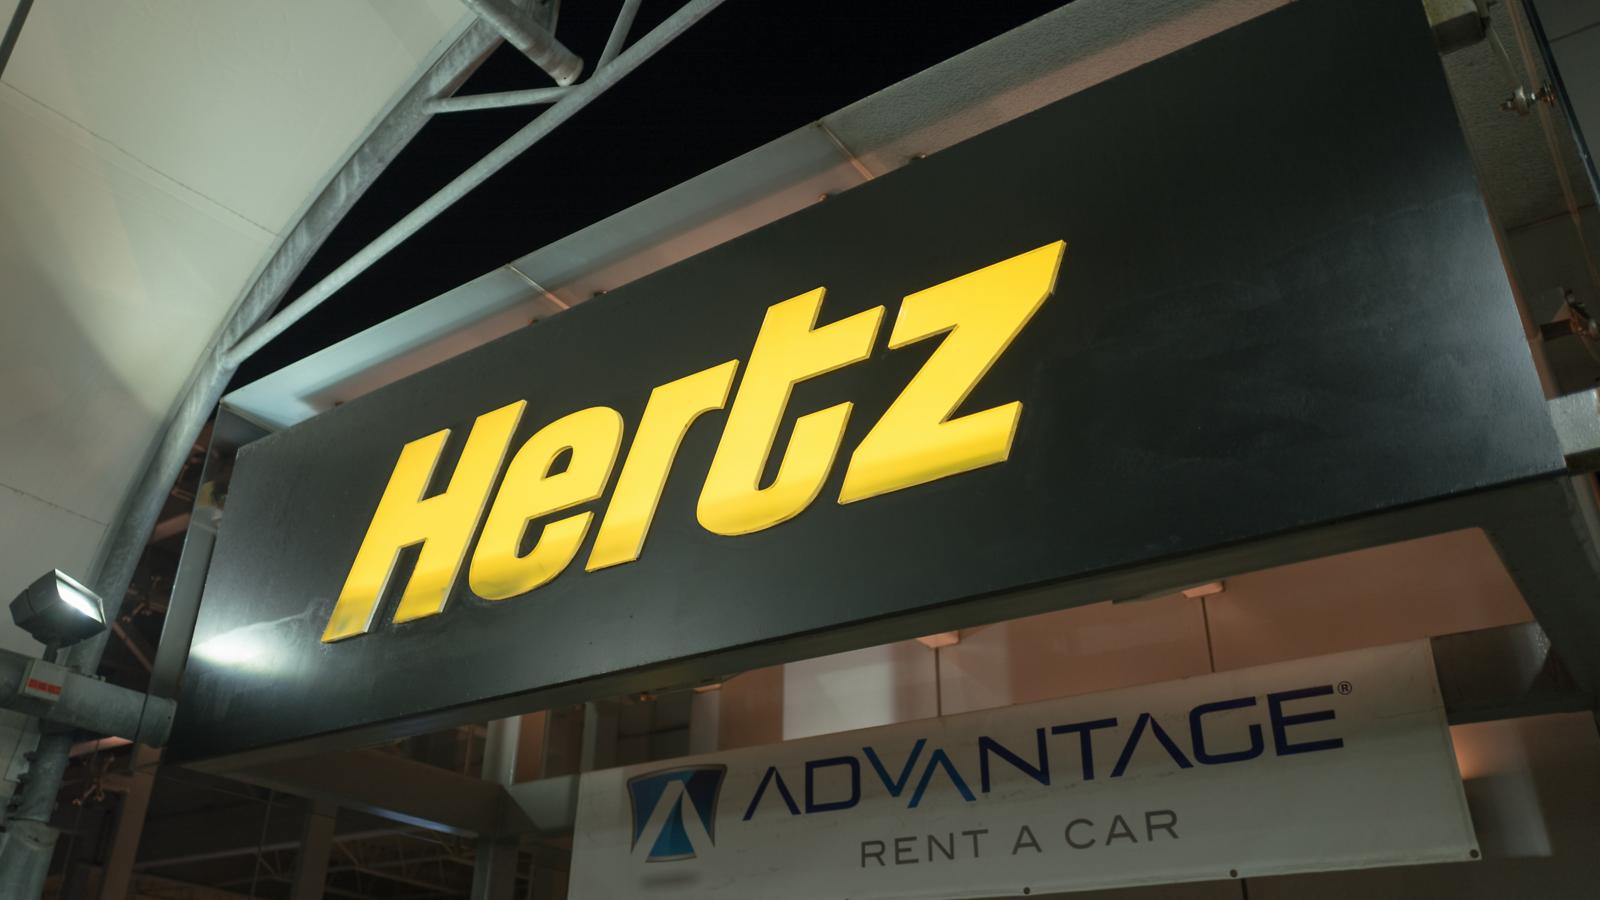 hertz crescent city airport